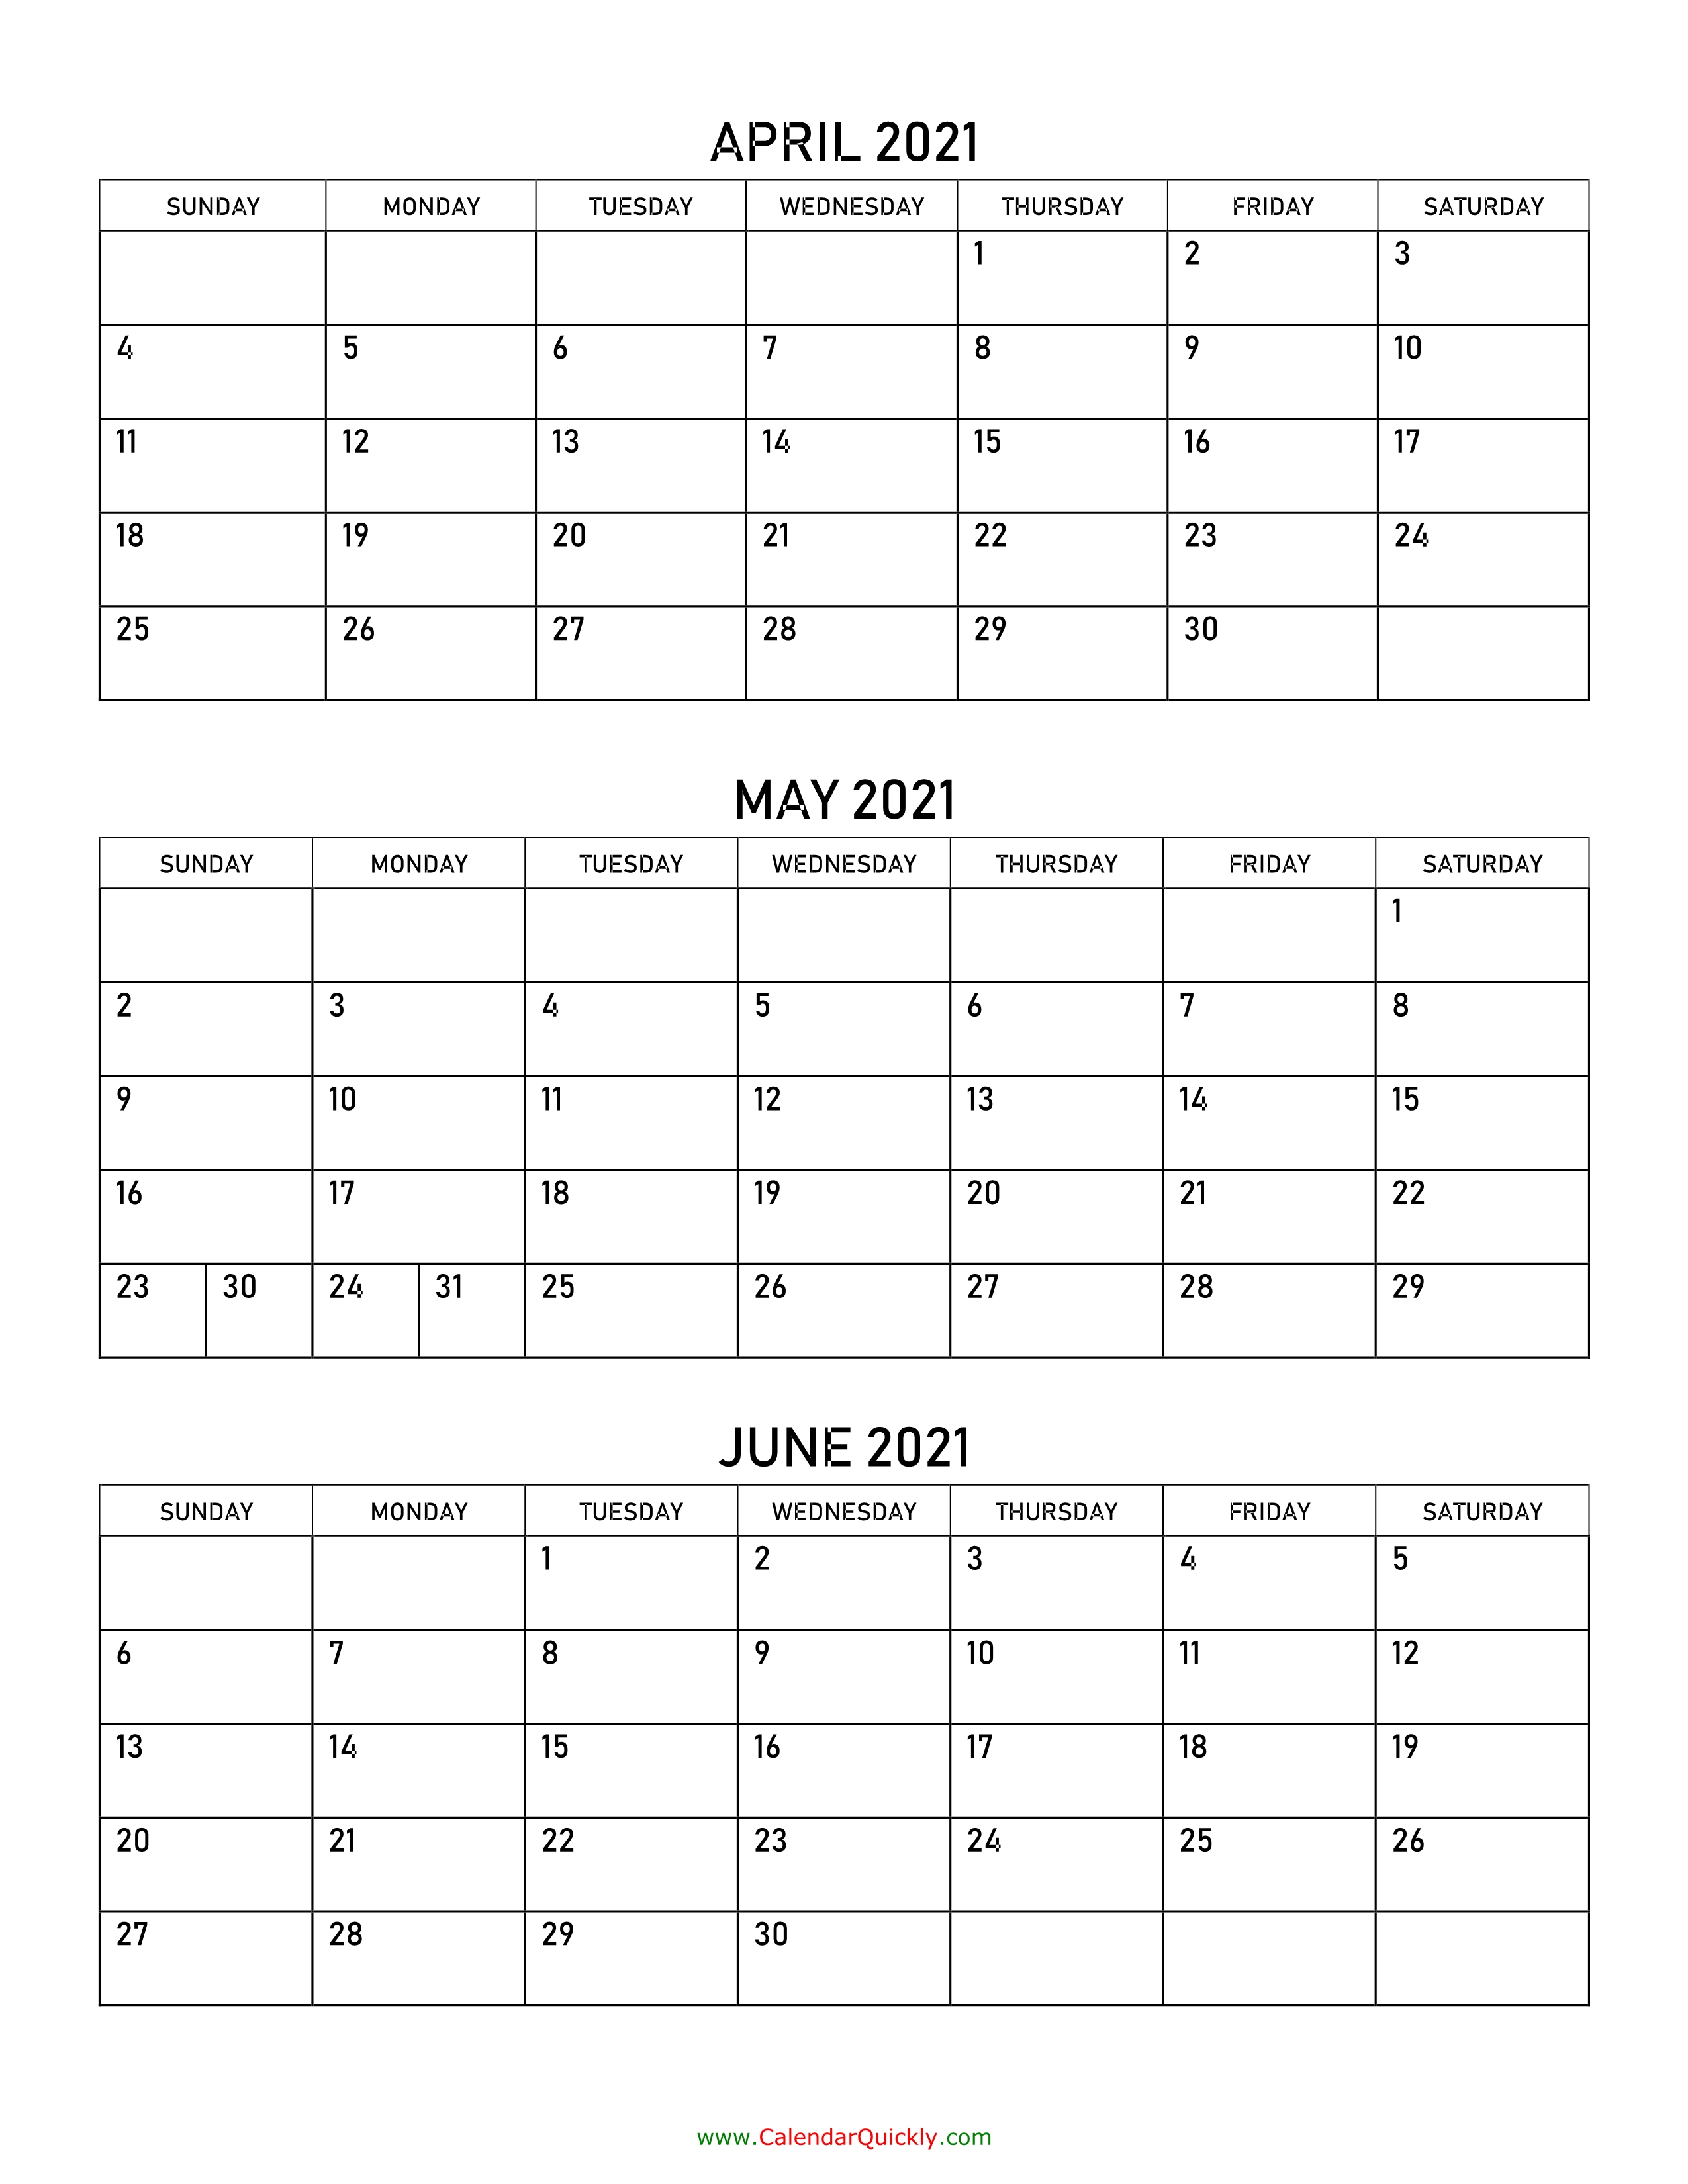 April To June 2021 Calendar | Calendar Quickly Calendar Of April May June 2021